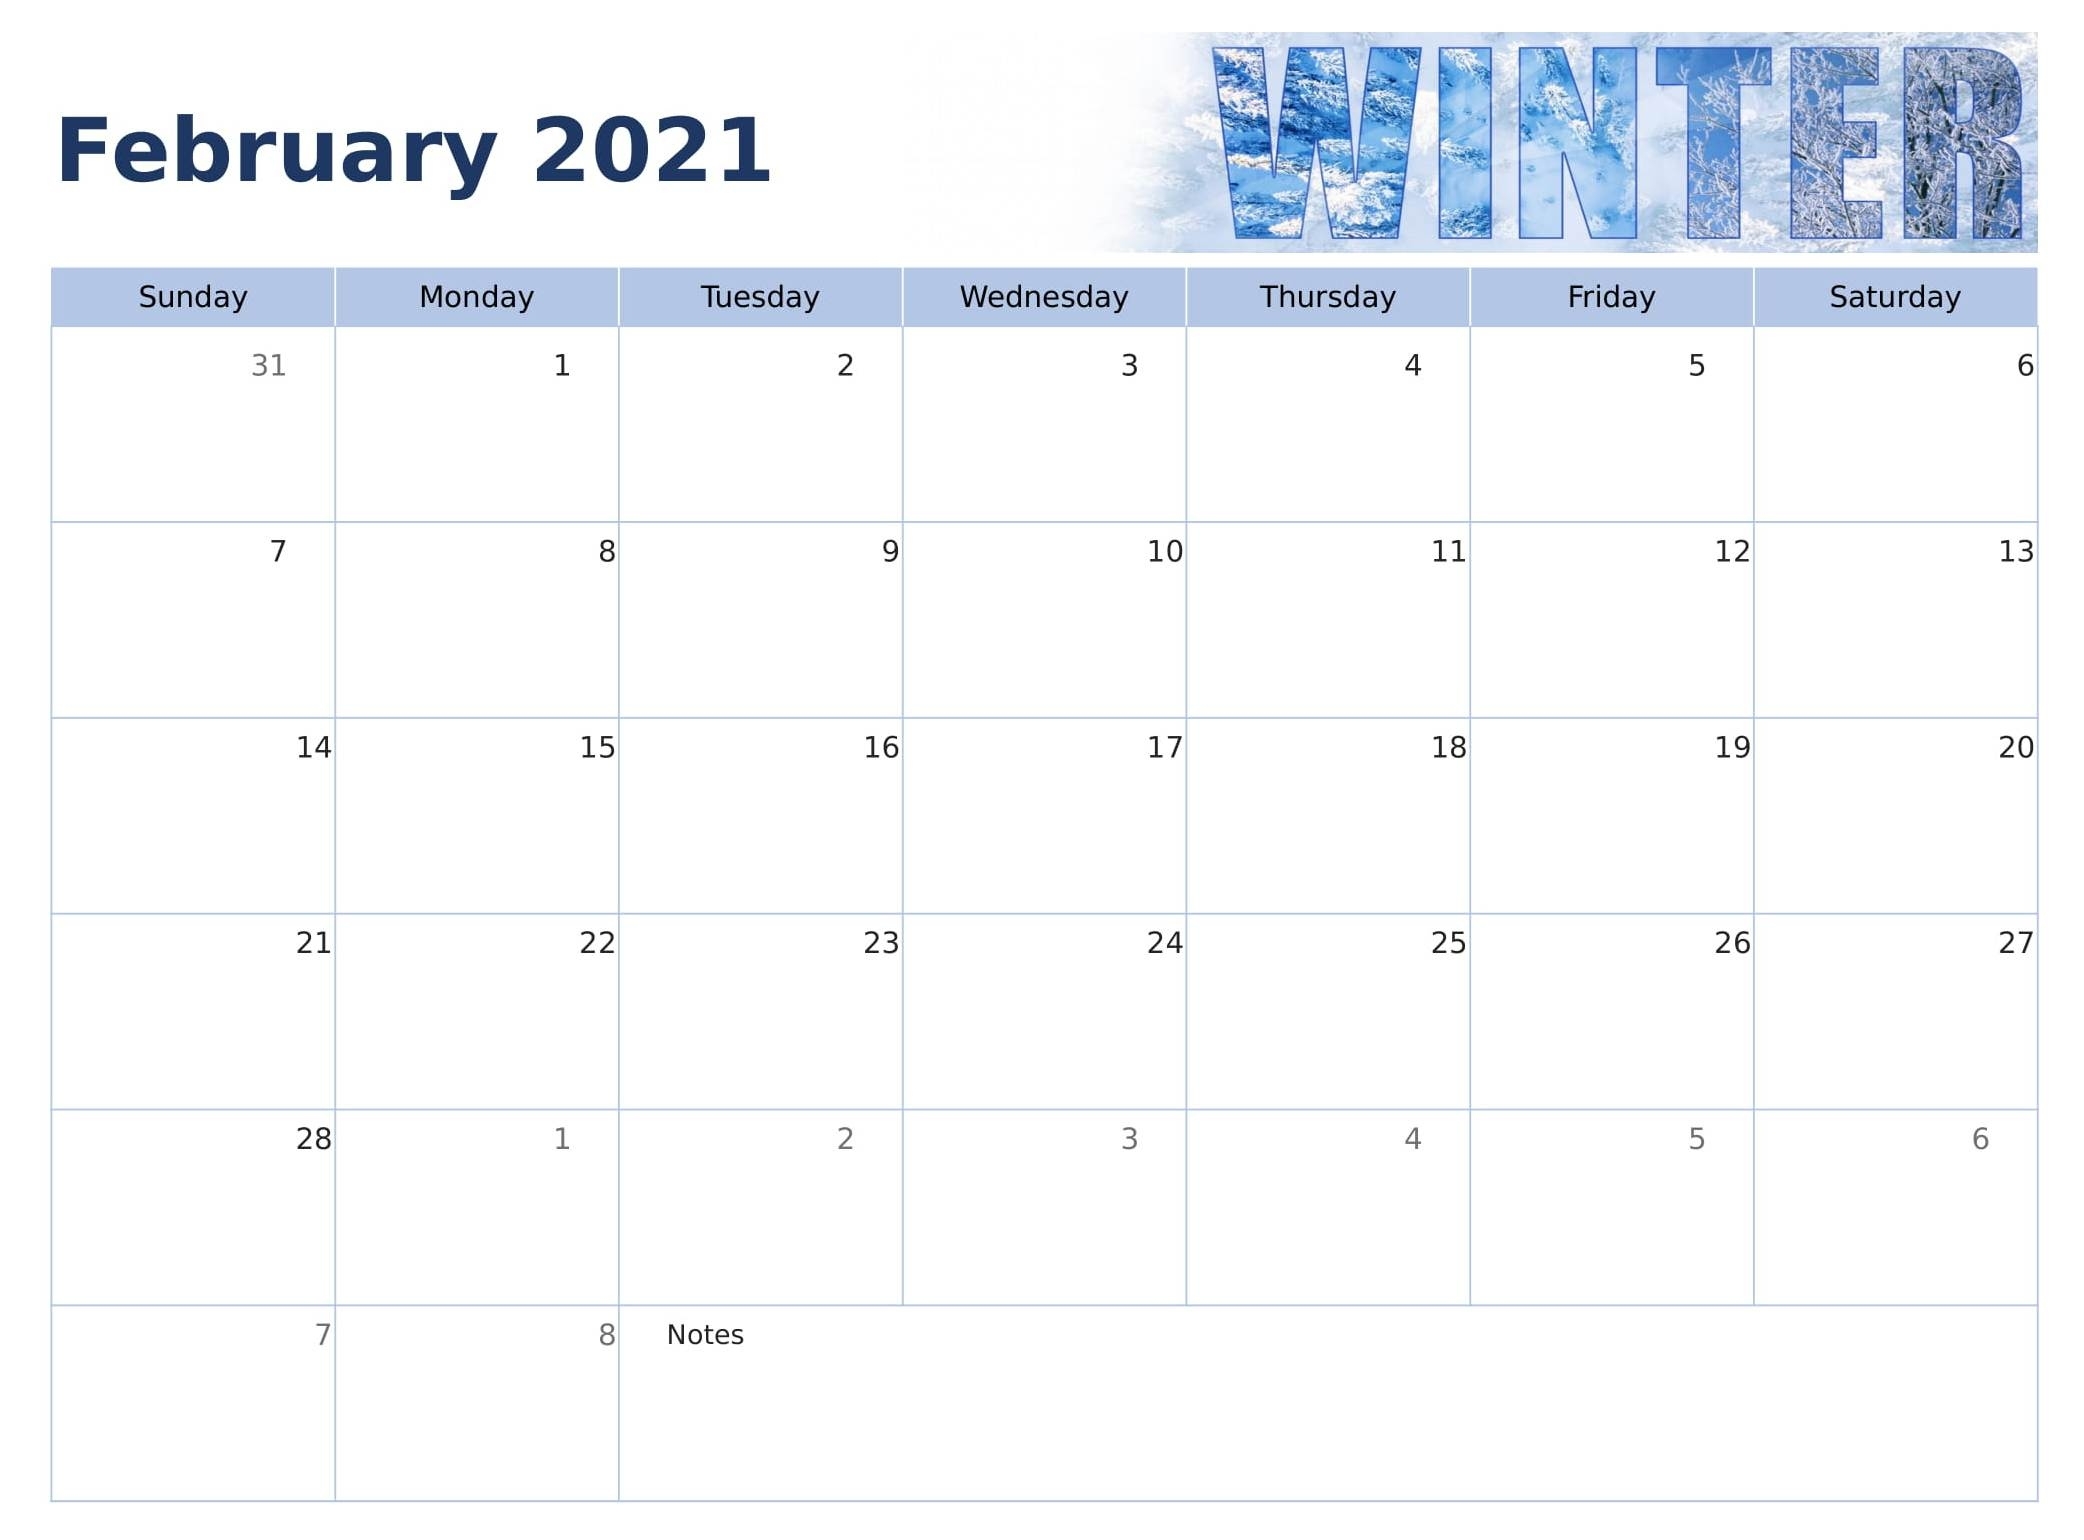 Monthly Calendar February 2021 Printable Template - Set Your Plan &amp; Tasks With Best Ideas Calendar September 2020 To February 2021